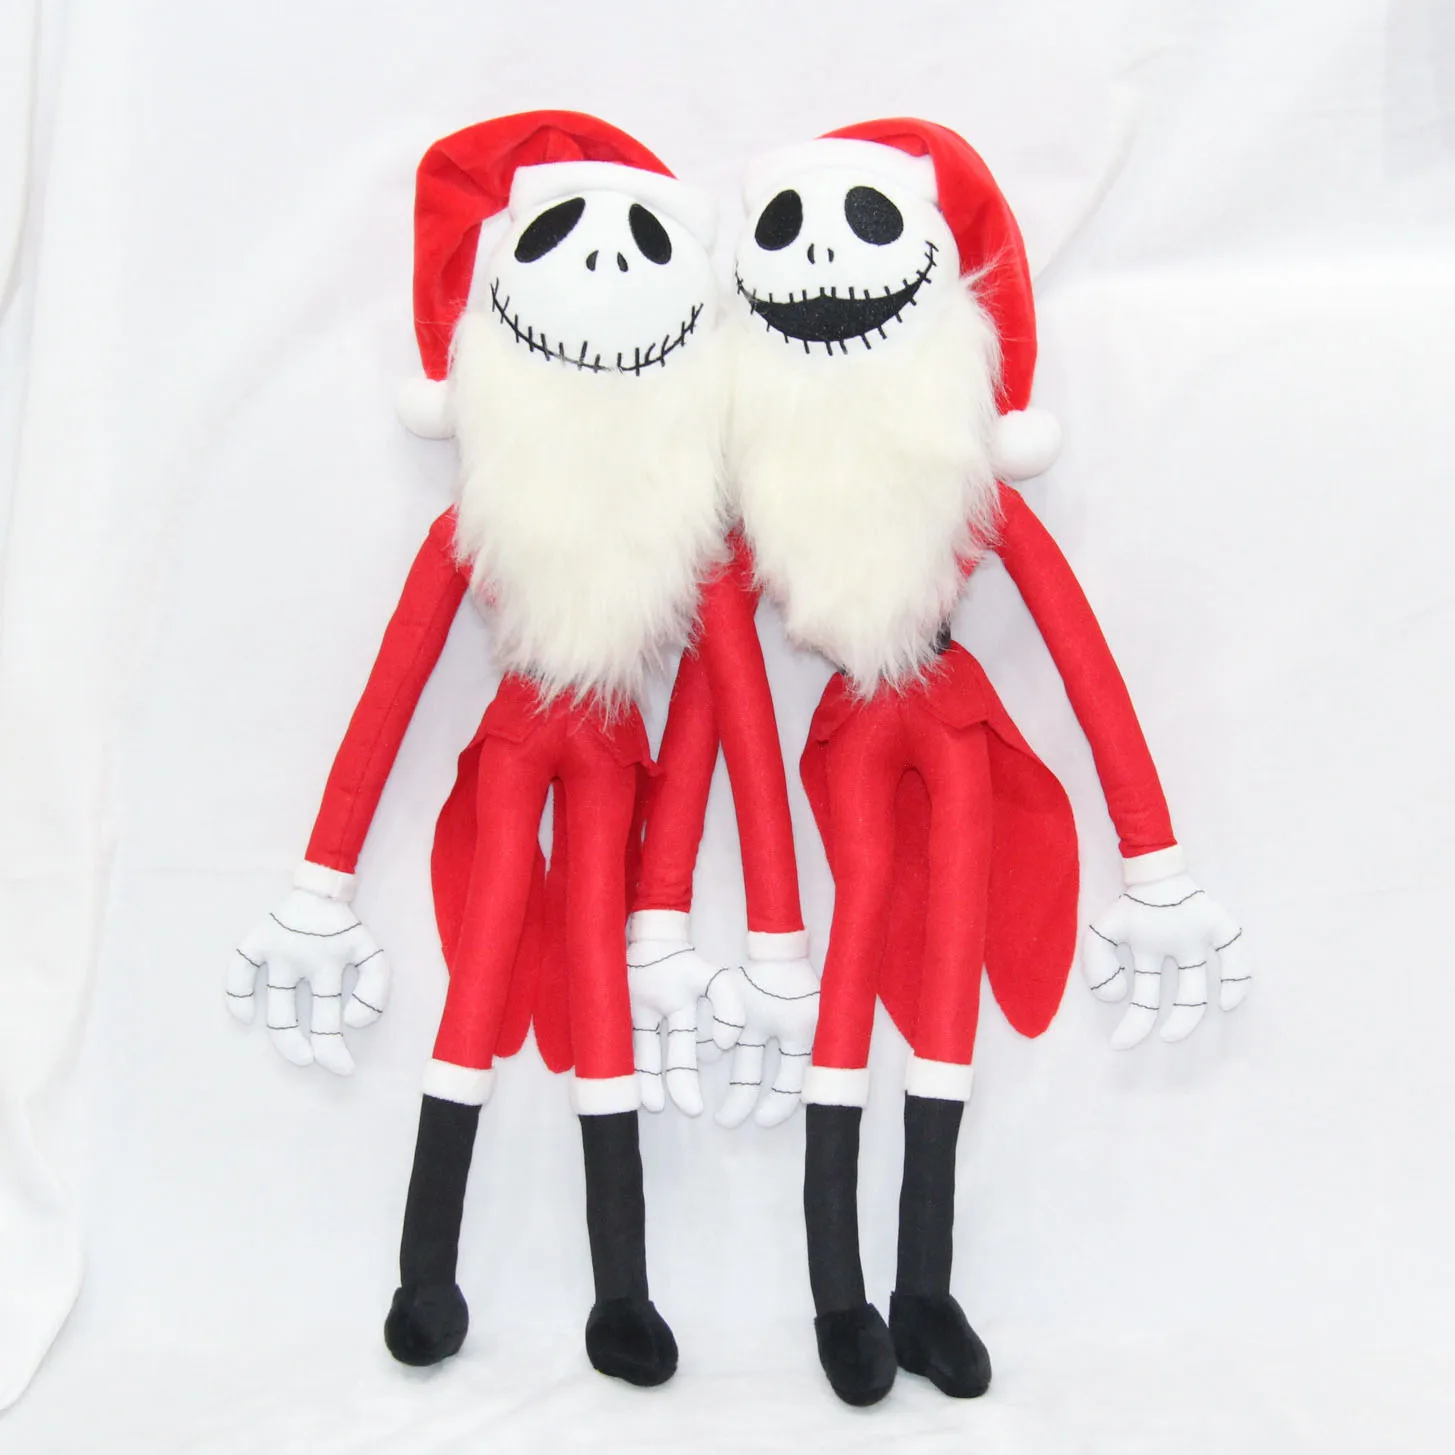 

50cm Disney The Nightmare Before Christmas Jack Skellington Santa Claus Plush Toys Soft Stuffed Dolls Kids Christmas Gift